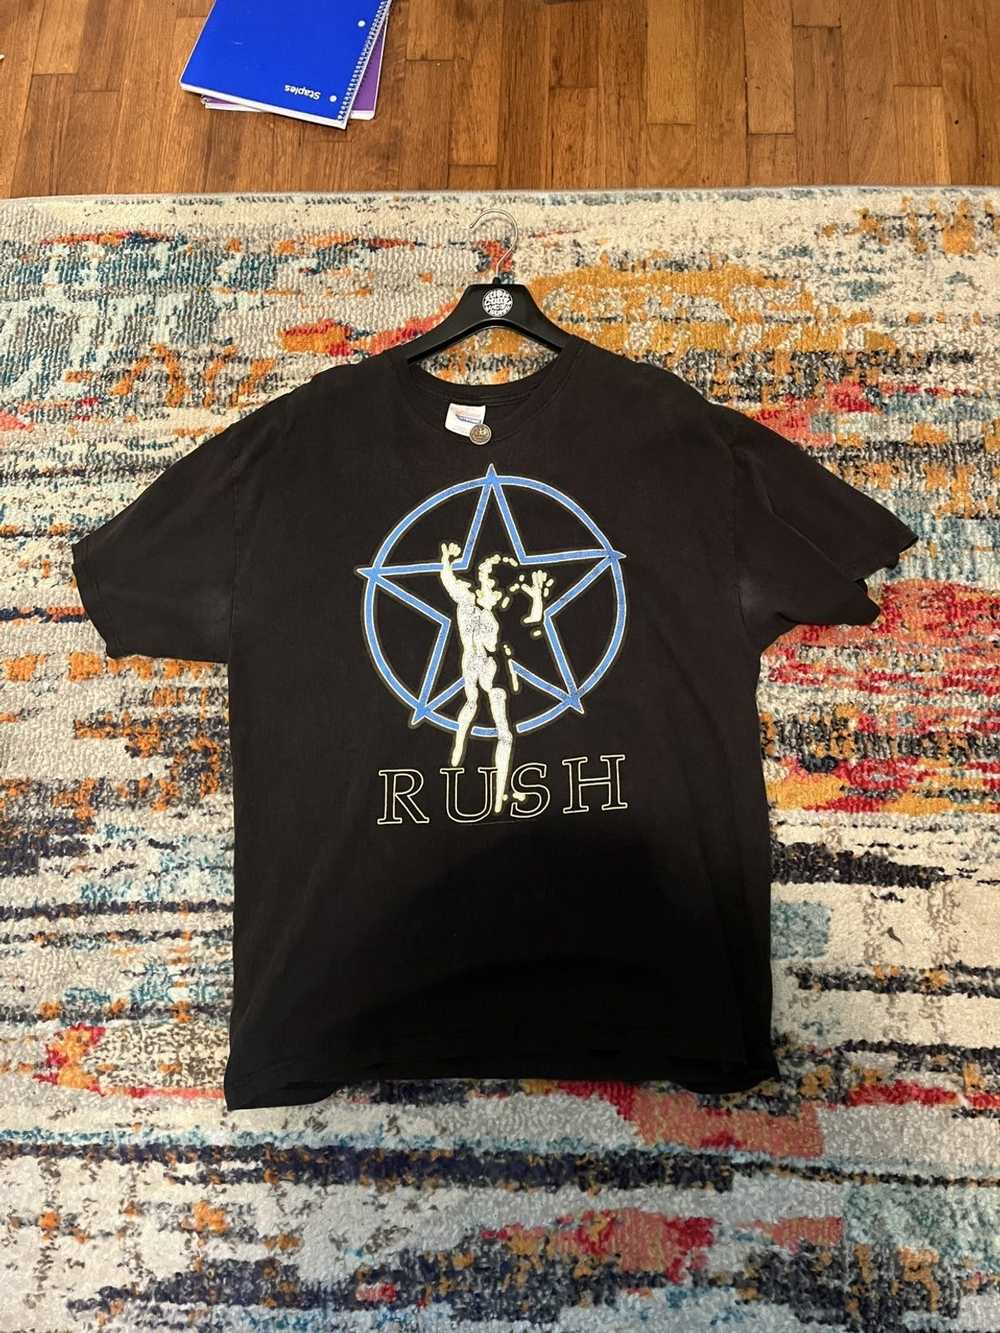 Vintage rush tour tshirt - Gem